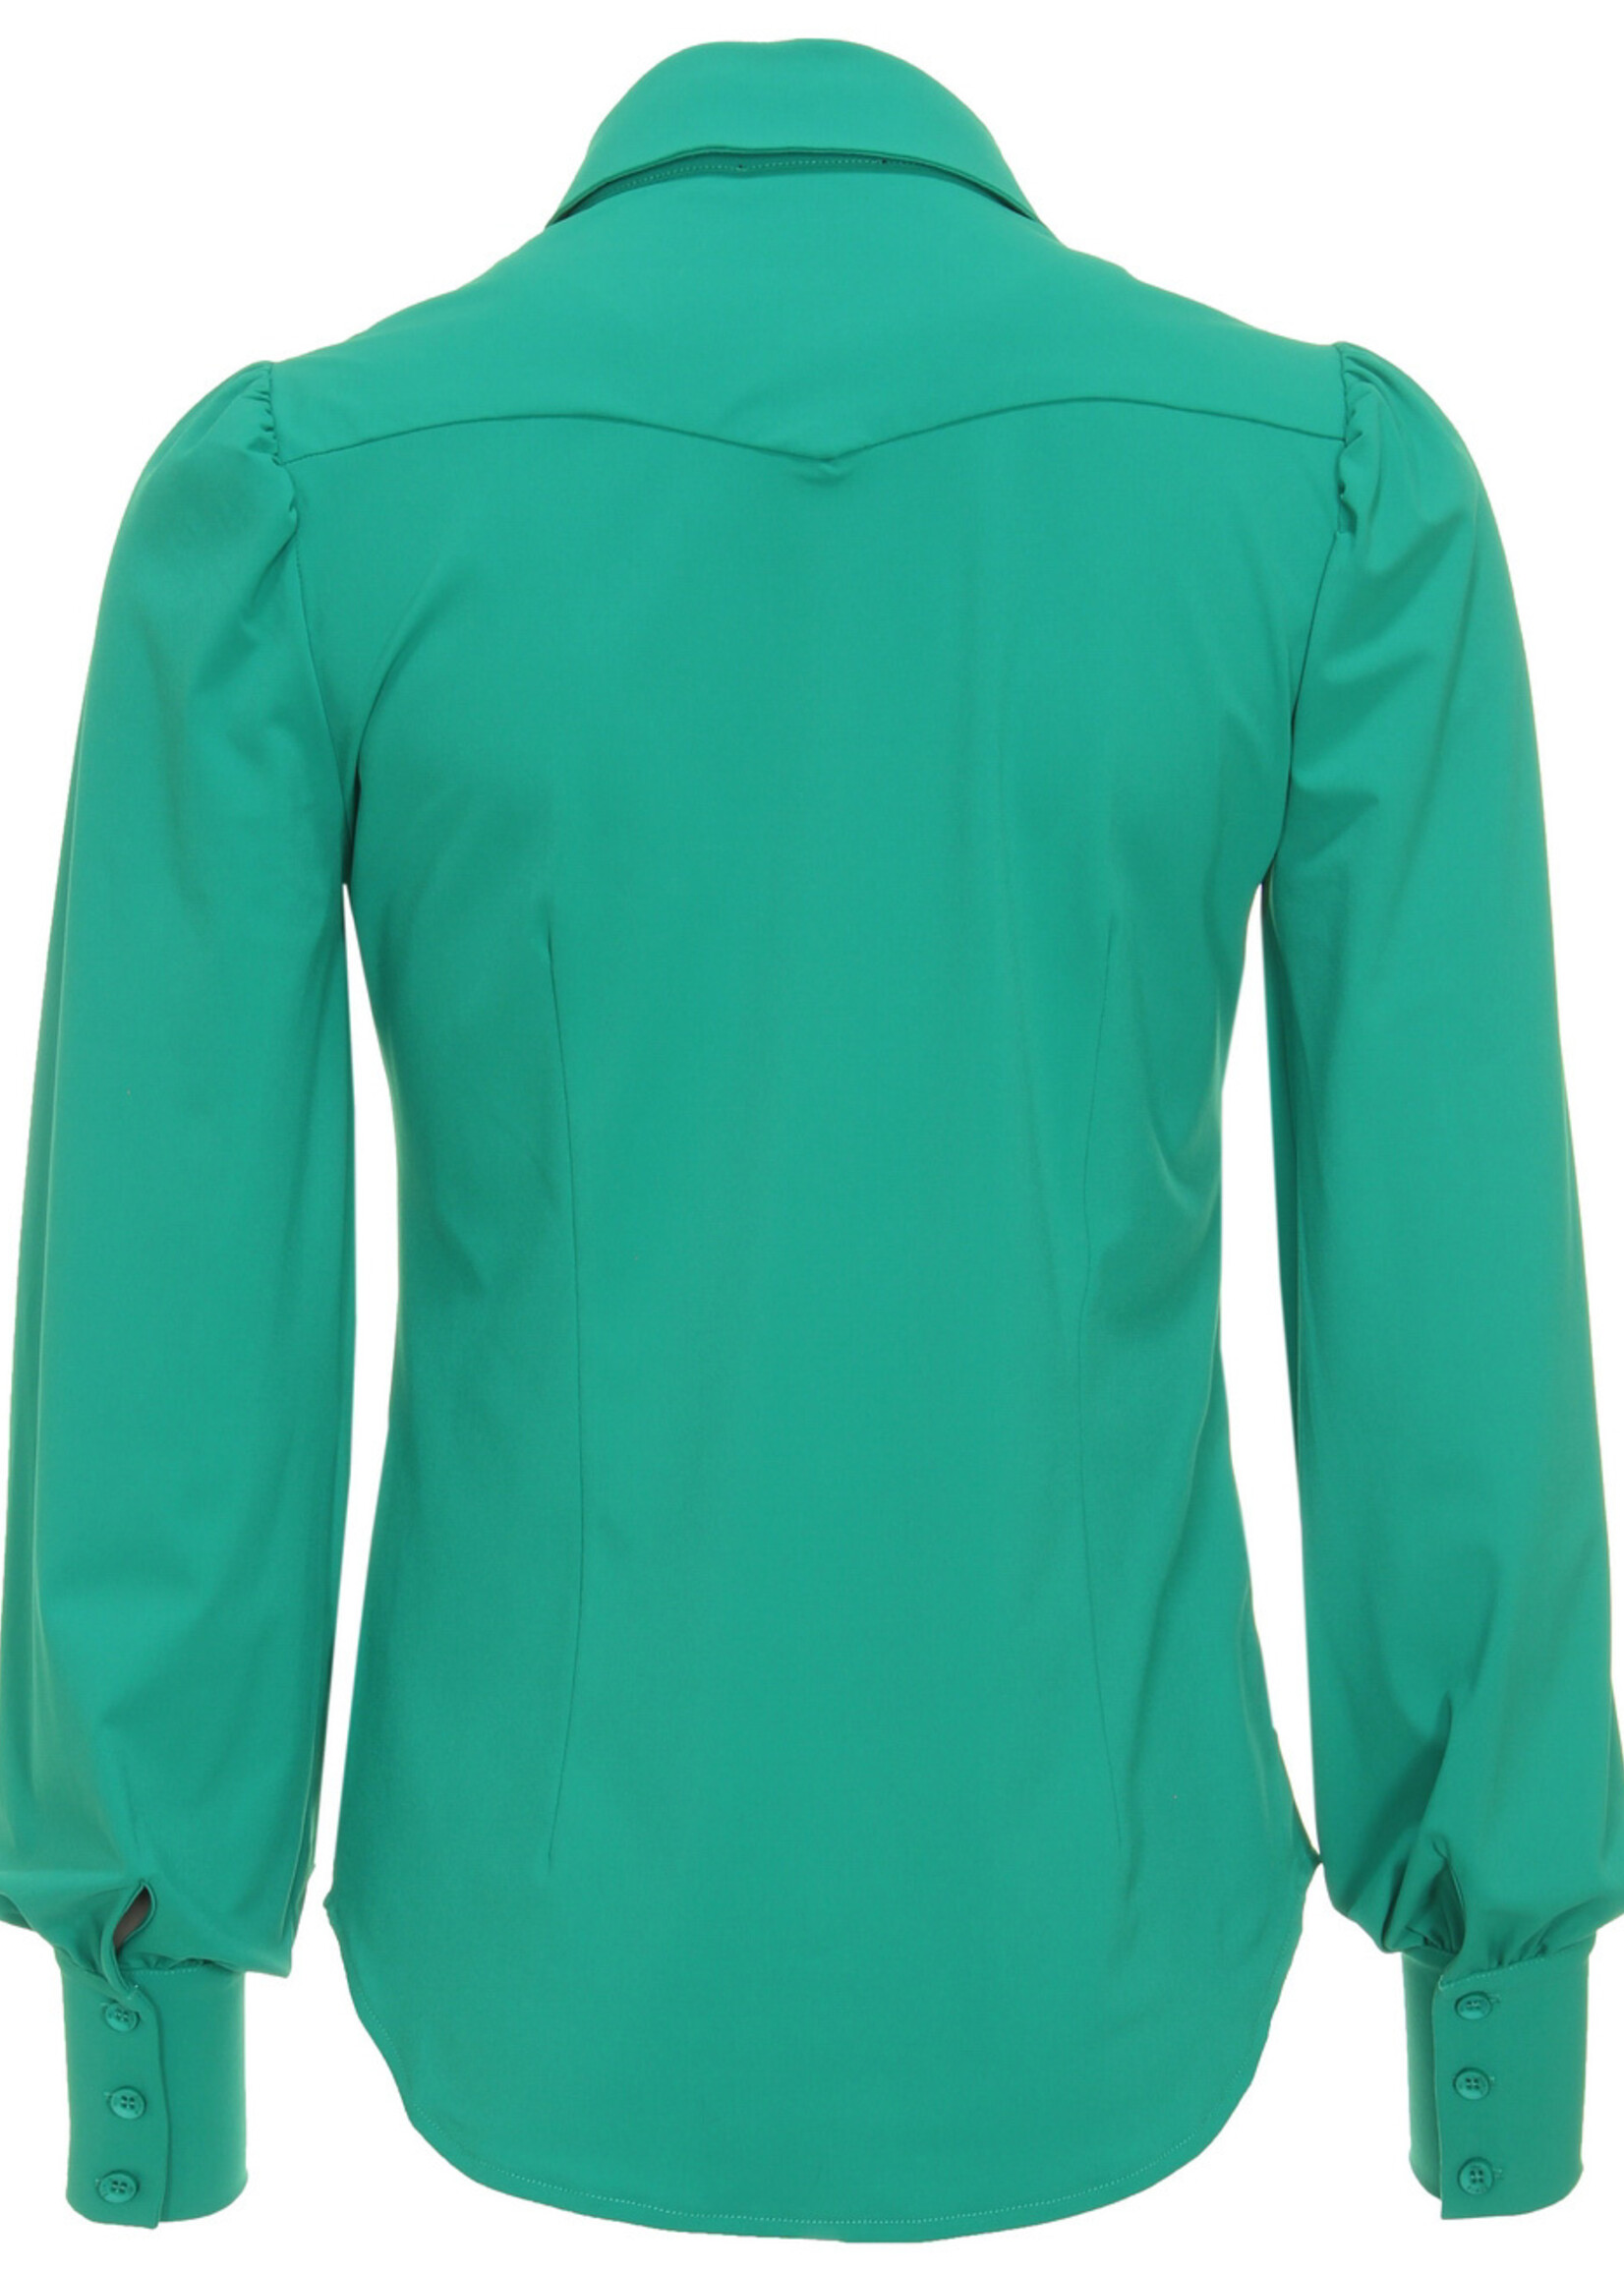 Mi Piace Travel blouse green 202037